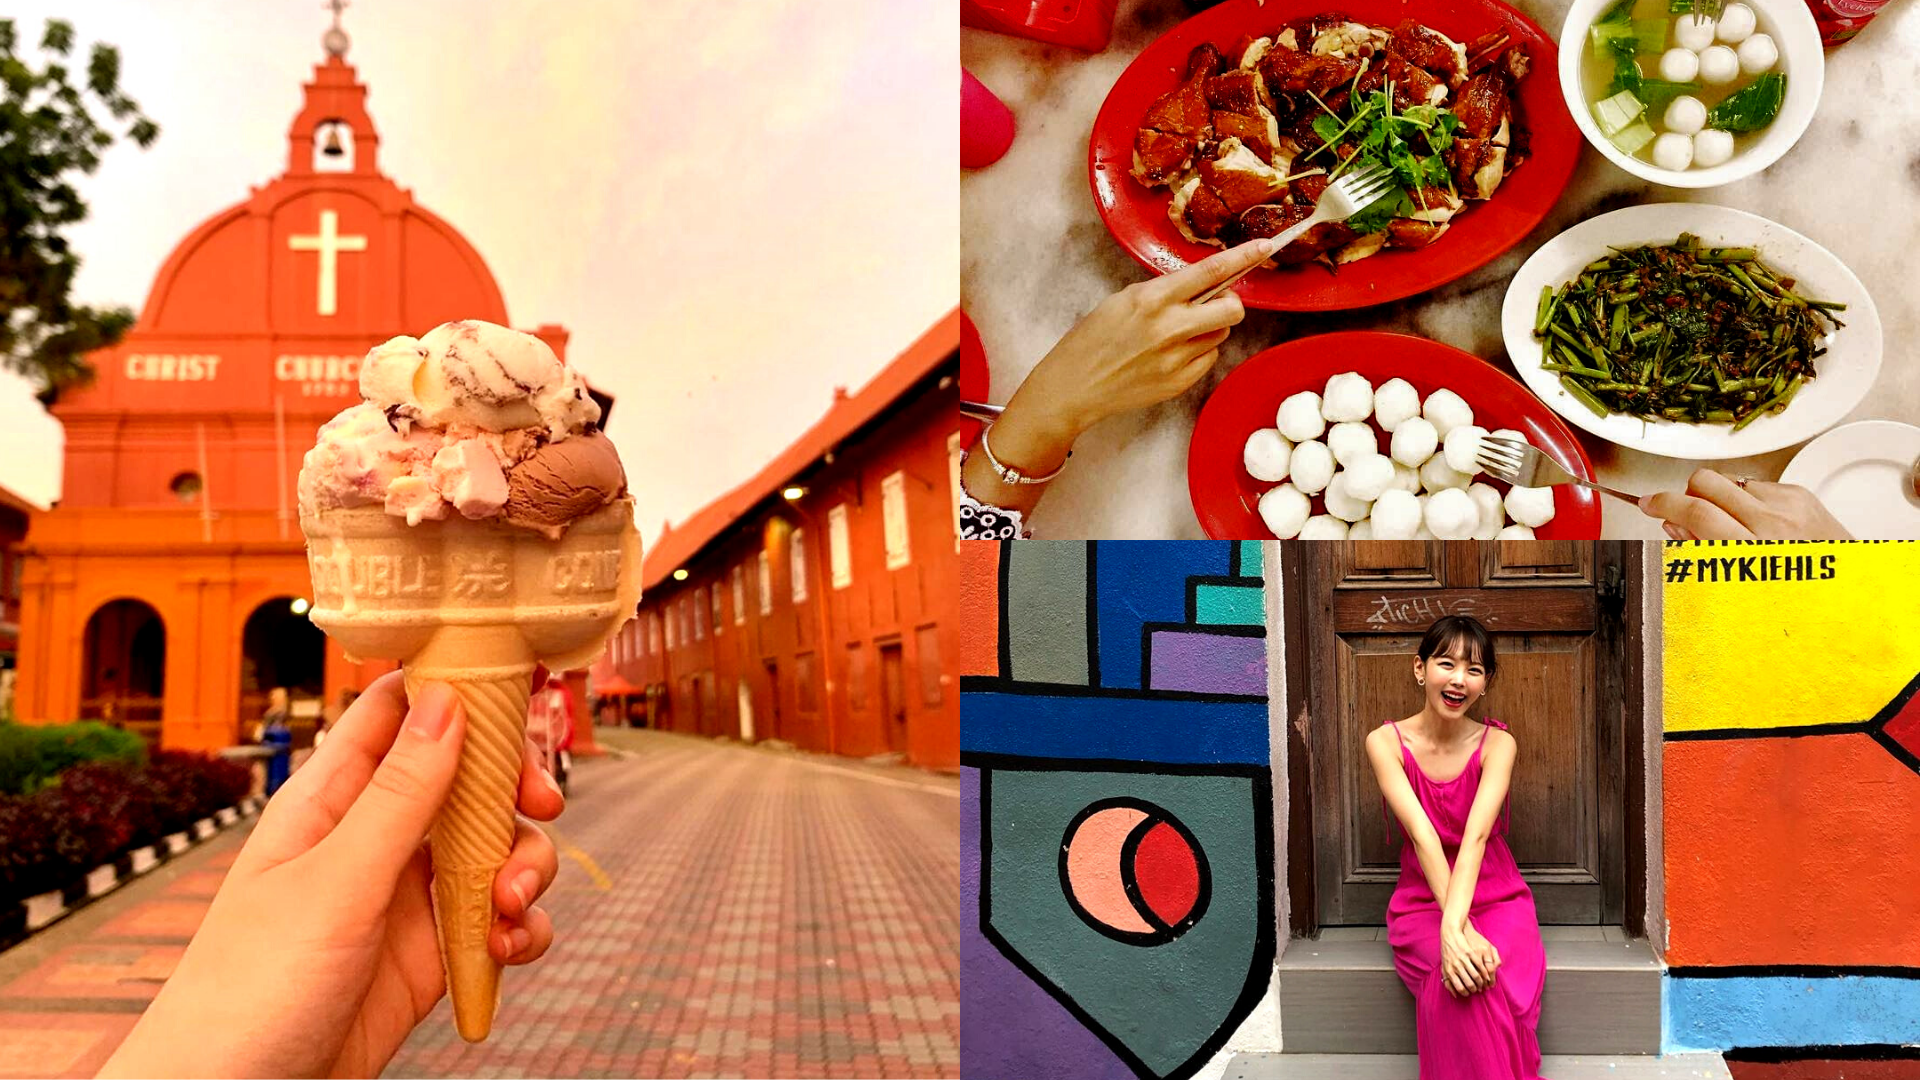 5 Best Budget Restaurants In Melaka Food Guide For Backpackers Laidback Trip